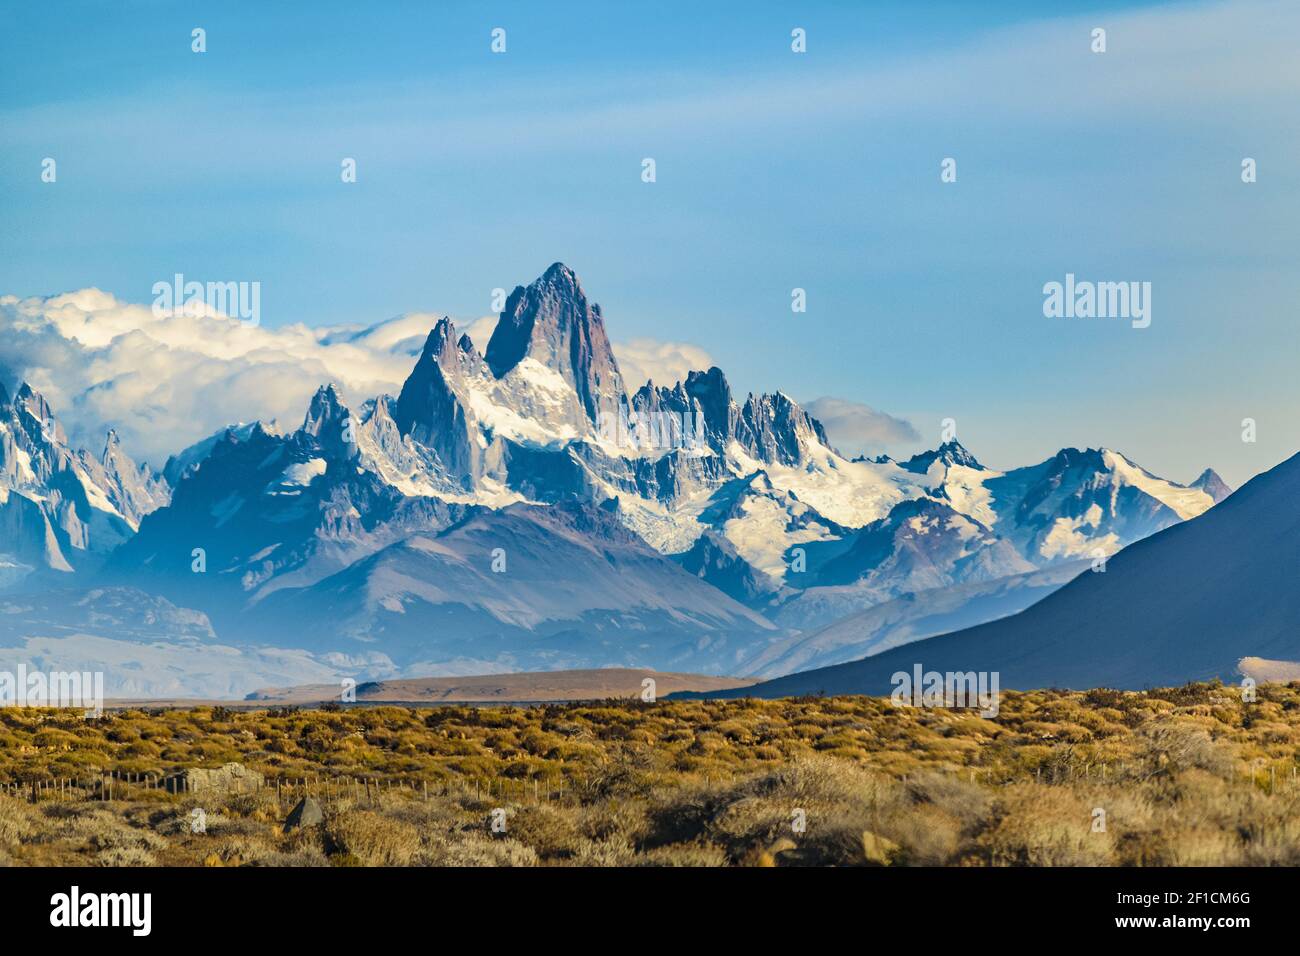 Snowy Andes Mountains, El Chalten, Argentina Stock Photo